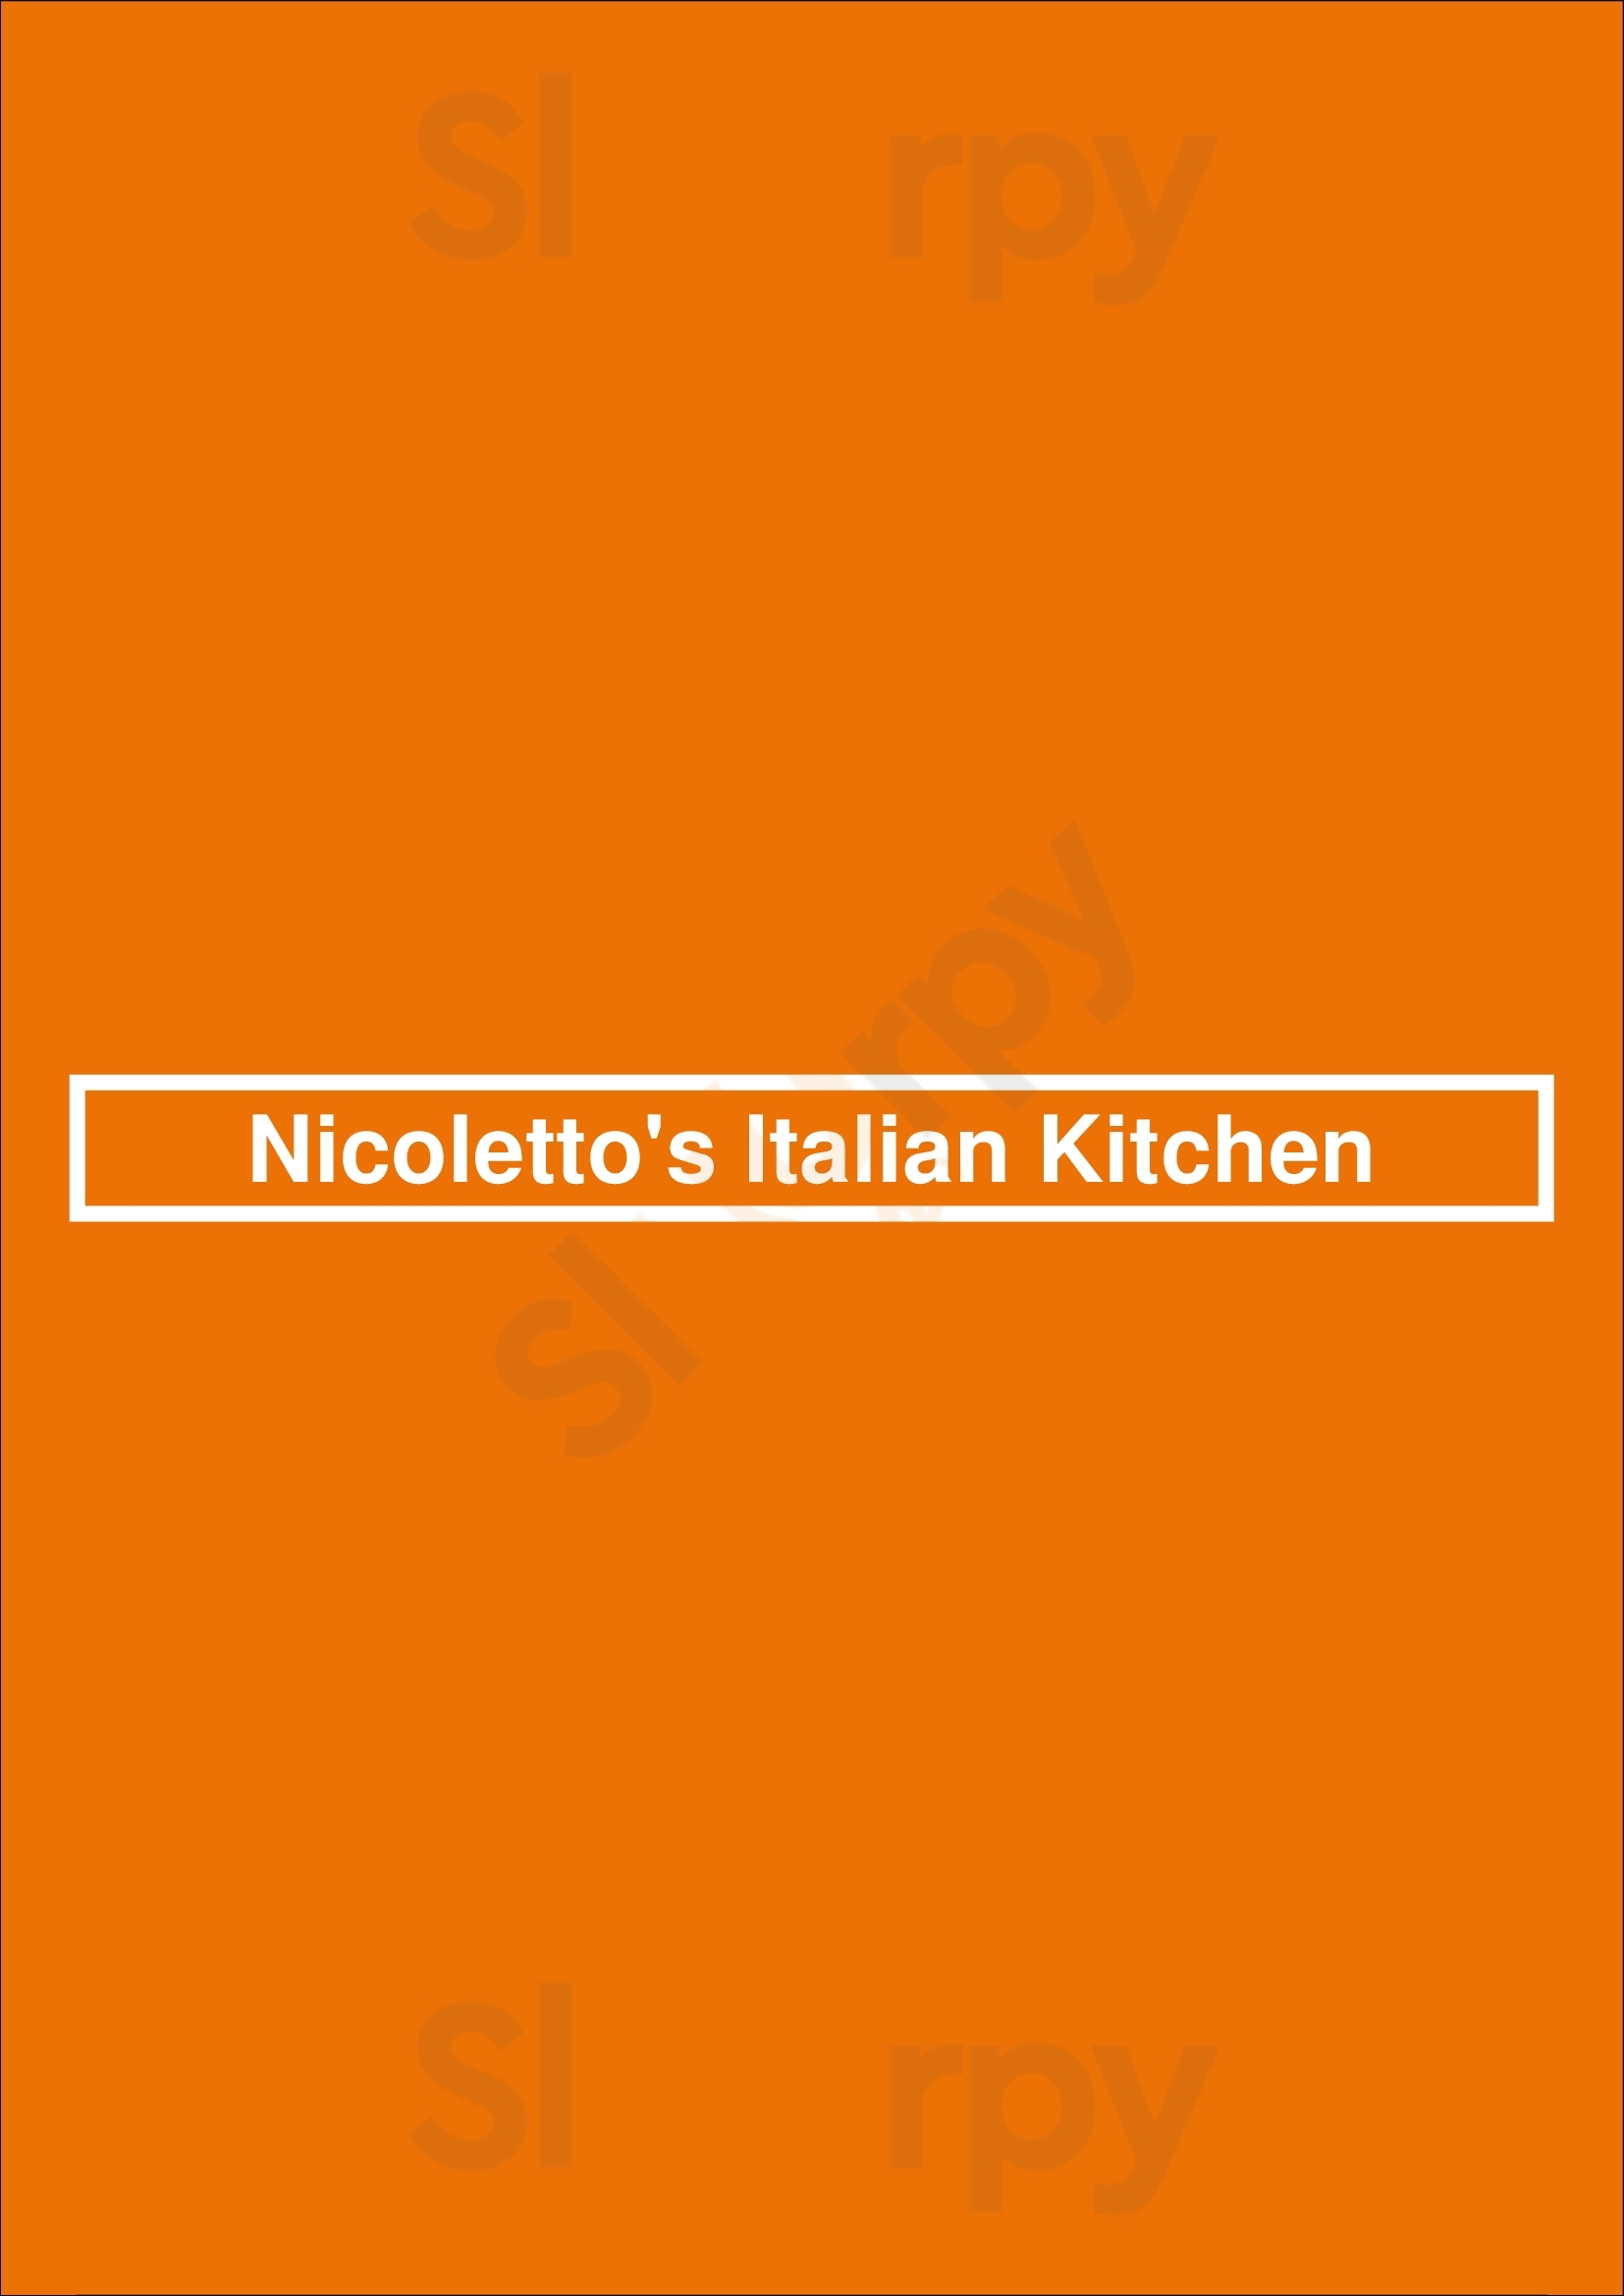 Nicoletto's Italian Kitchen Nashville Menu - 1